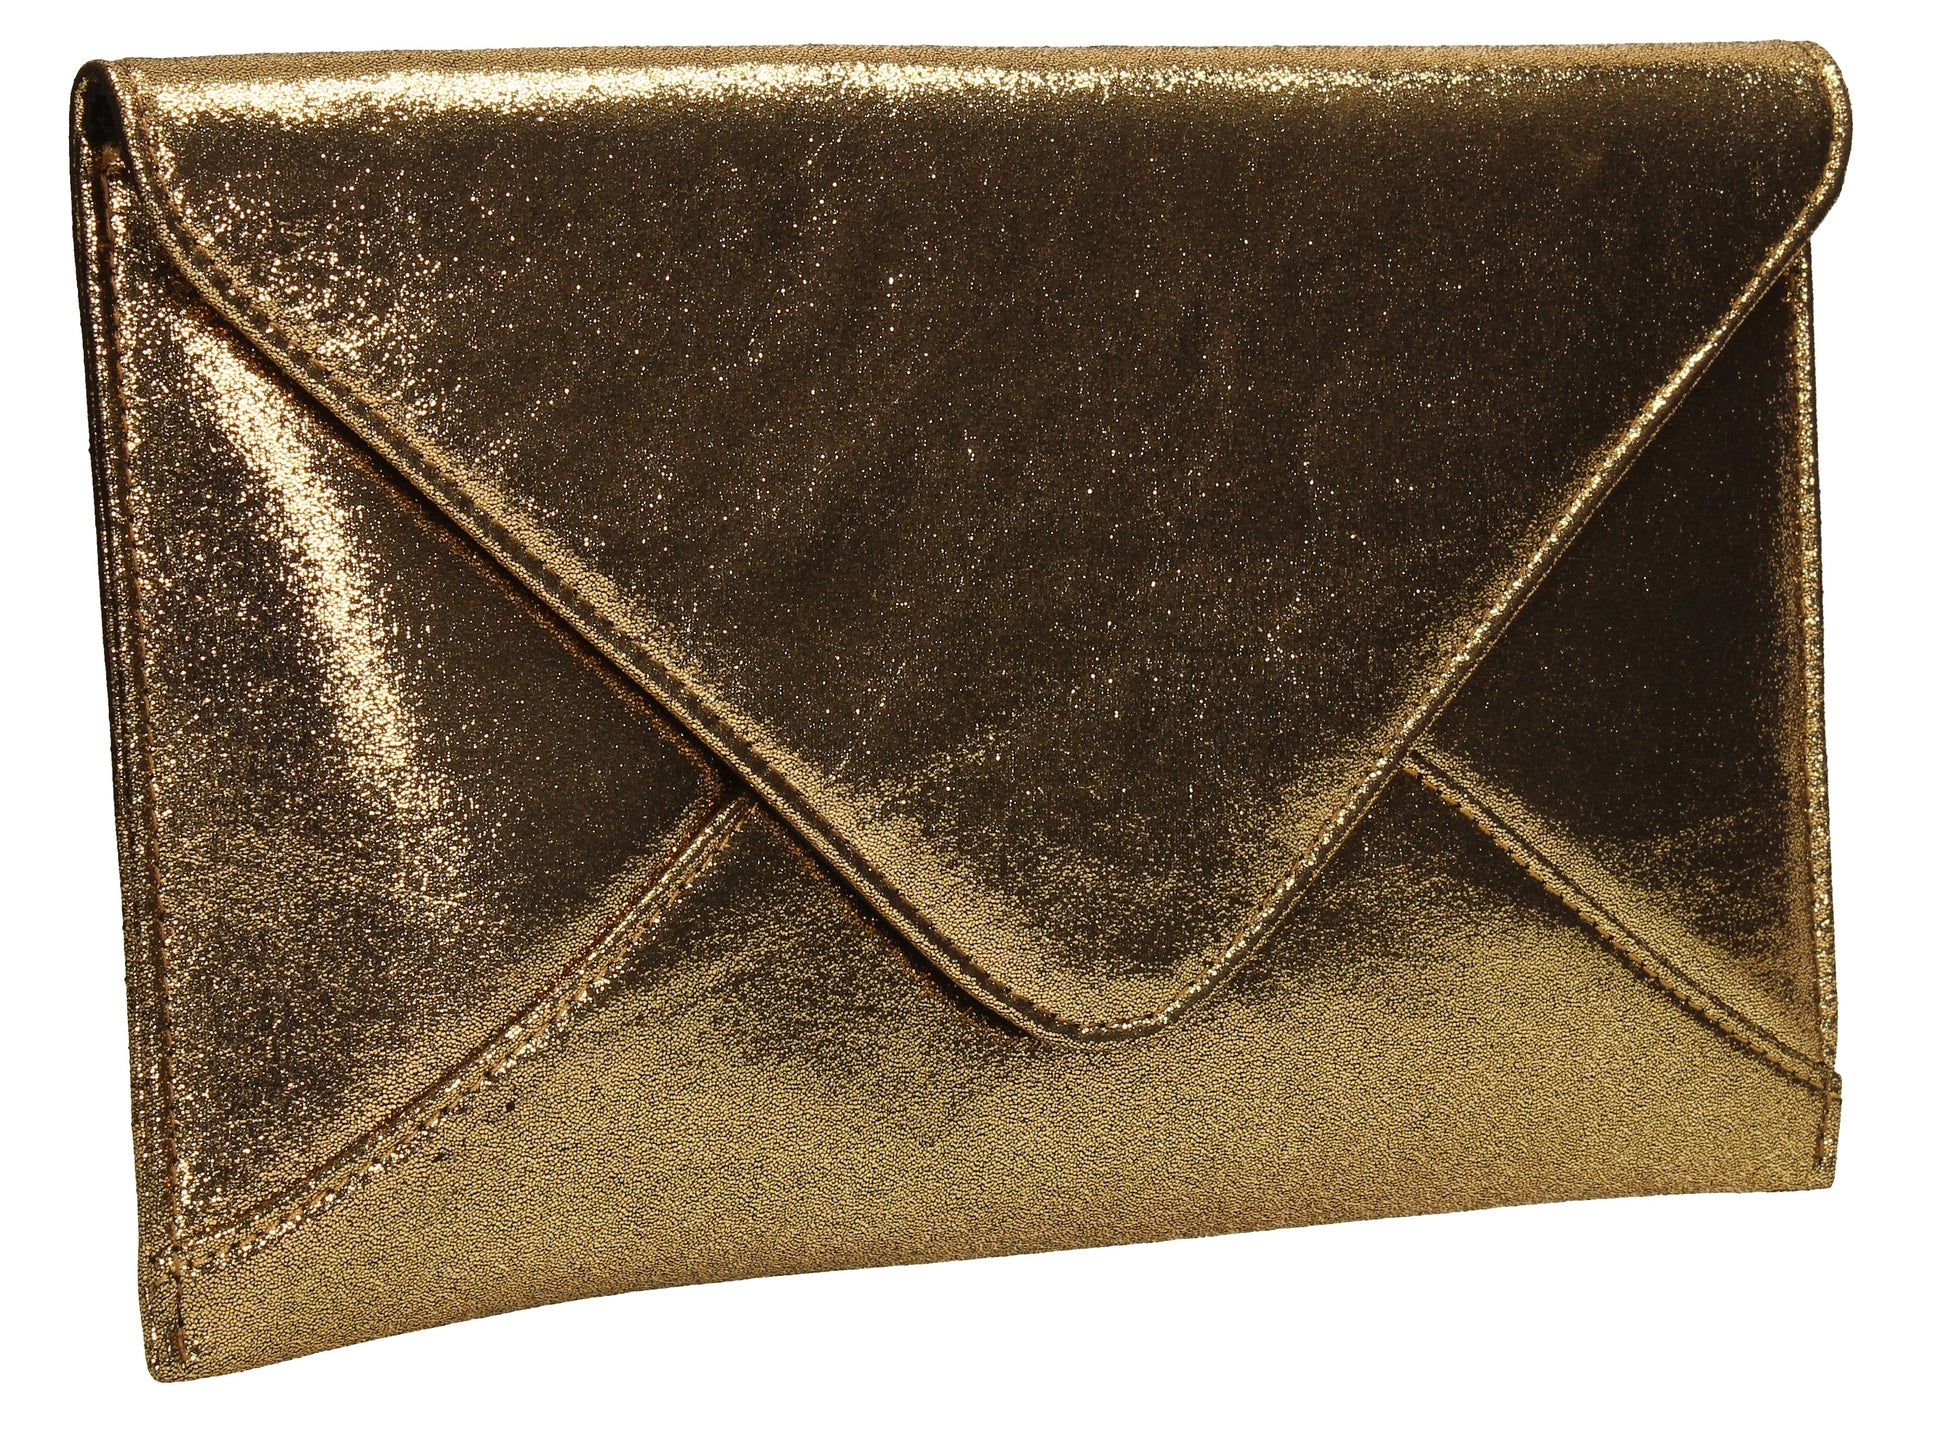 SWANKYSWANS Khloe Clutch Bag Gold Cute Cheap Clutch Bag For Weddings School and Work